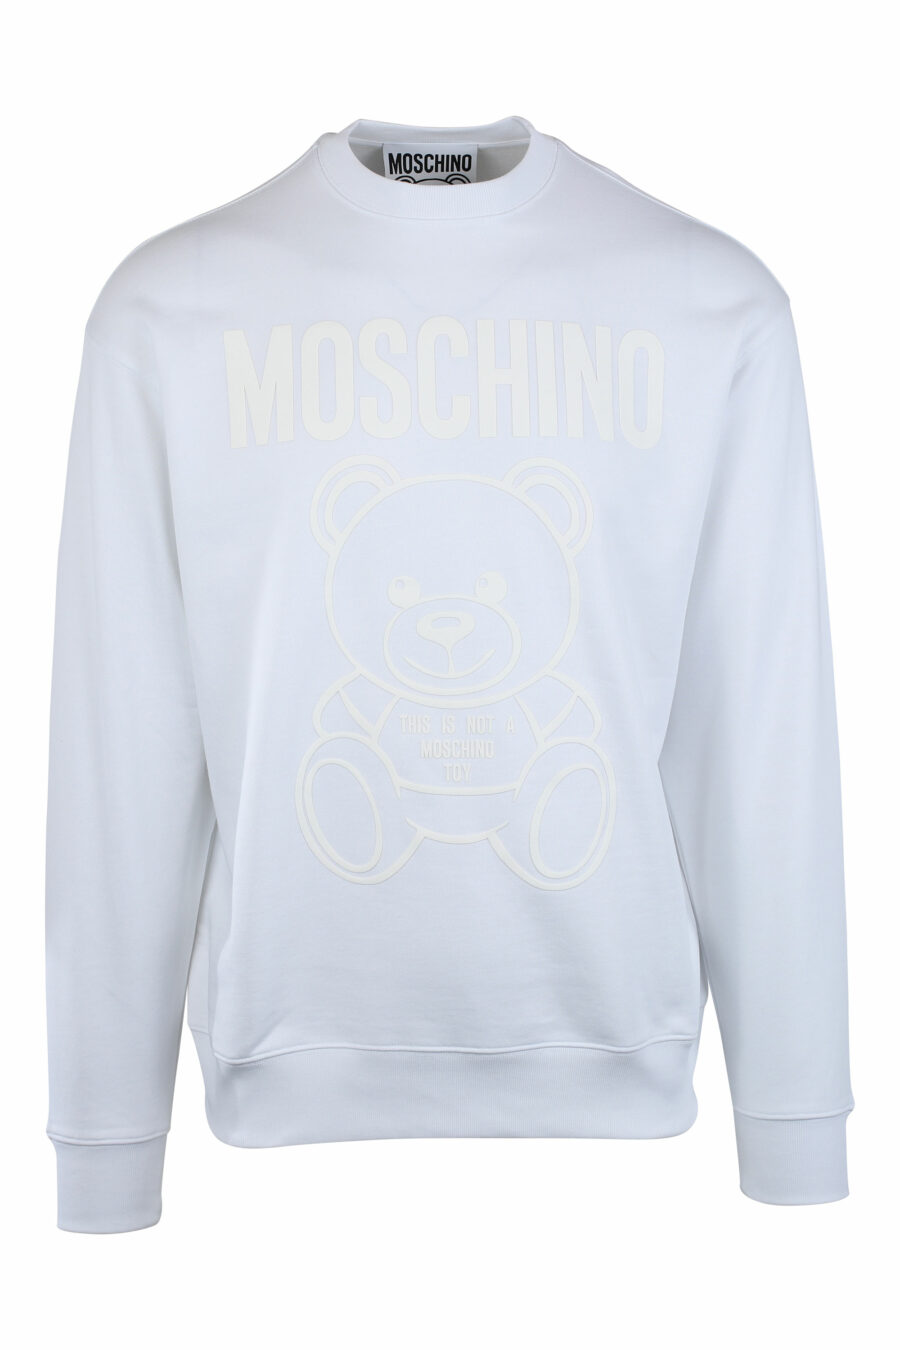 White sweatshirt with monochrome bear maxilogo - IMG 1361